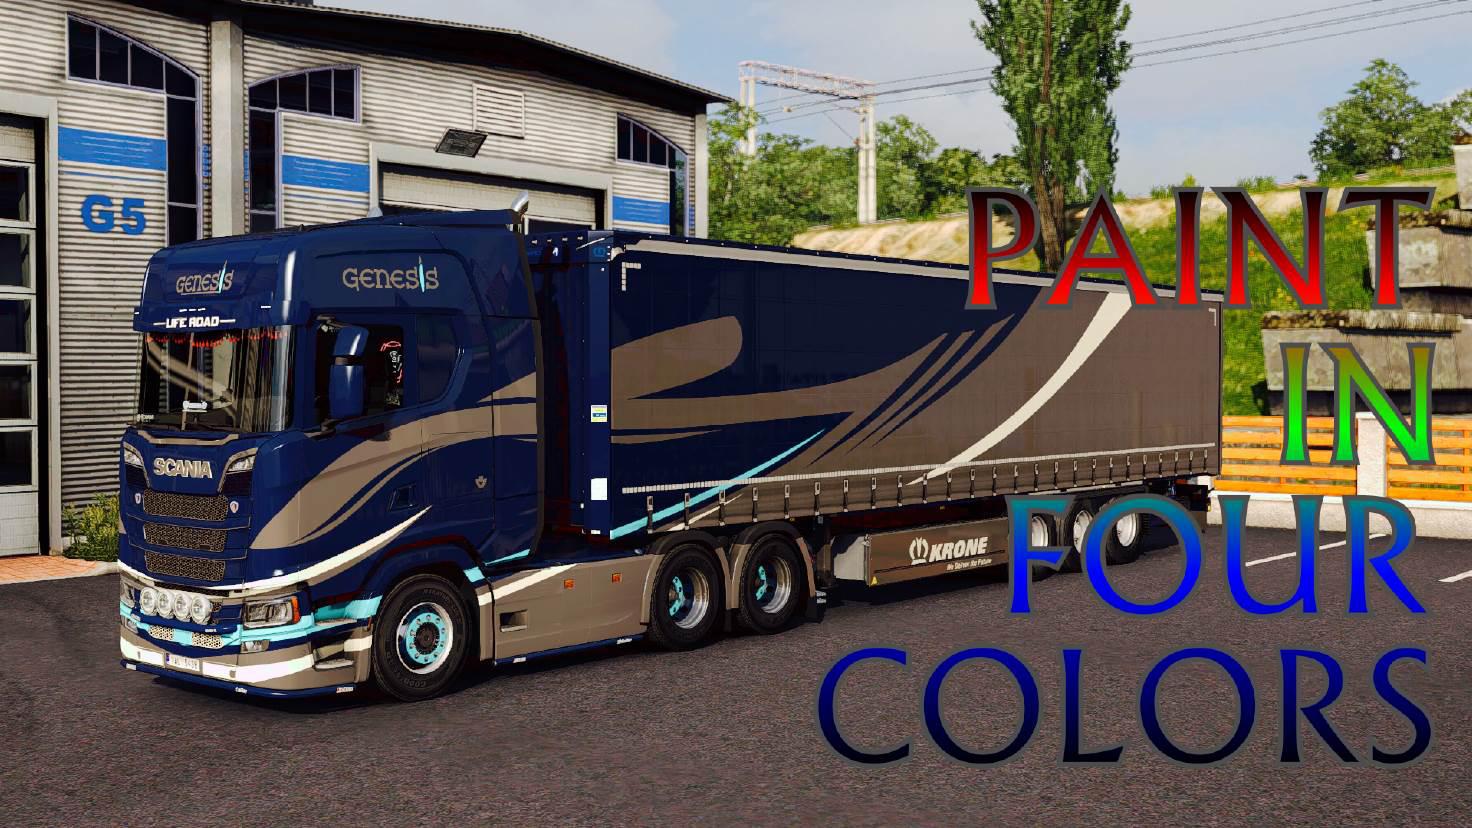 Euro Truck Simulator 2 - Krone Trailer Pack Download] [portable]